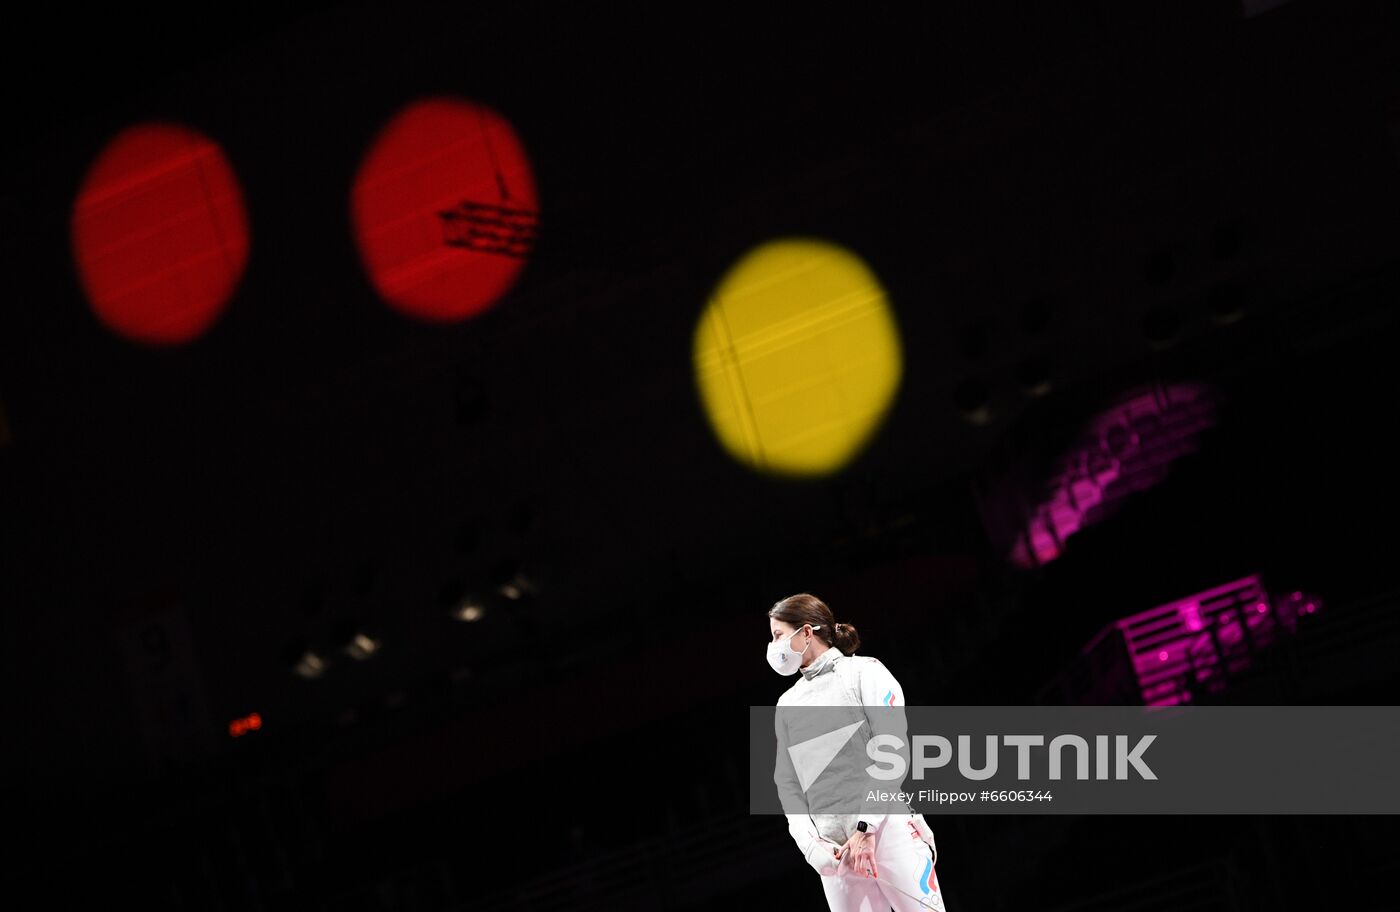 Japan Olympics 2020 Fencing Women Foil